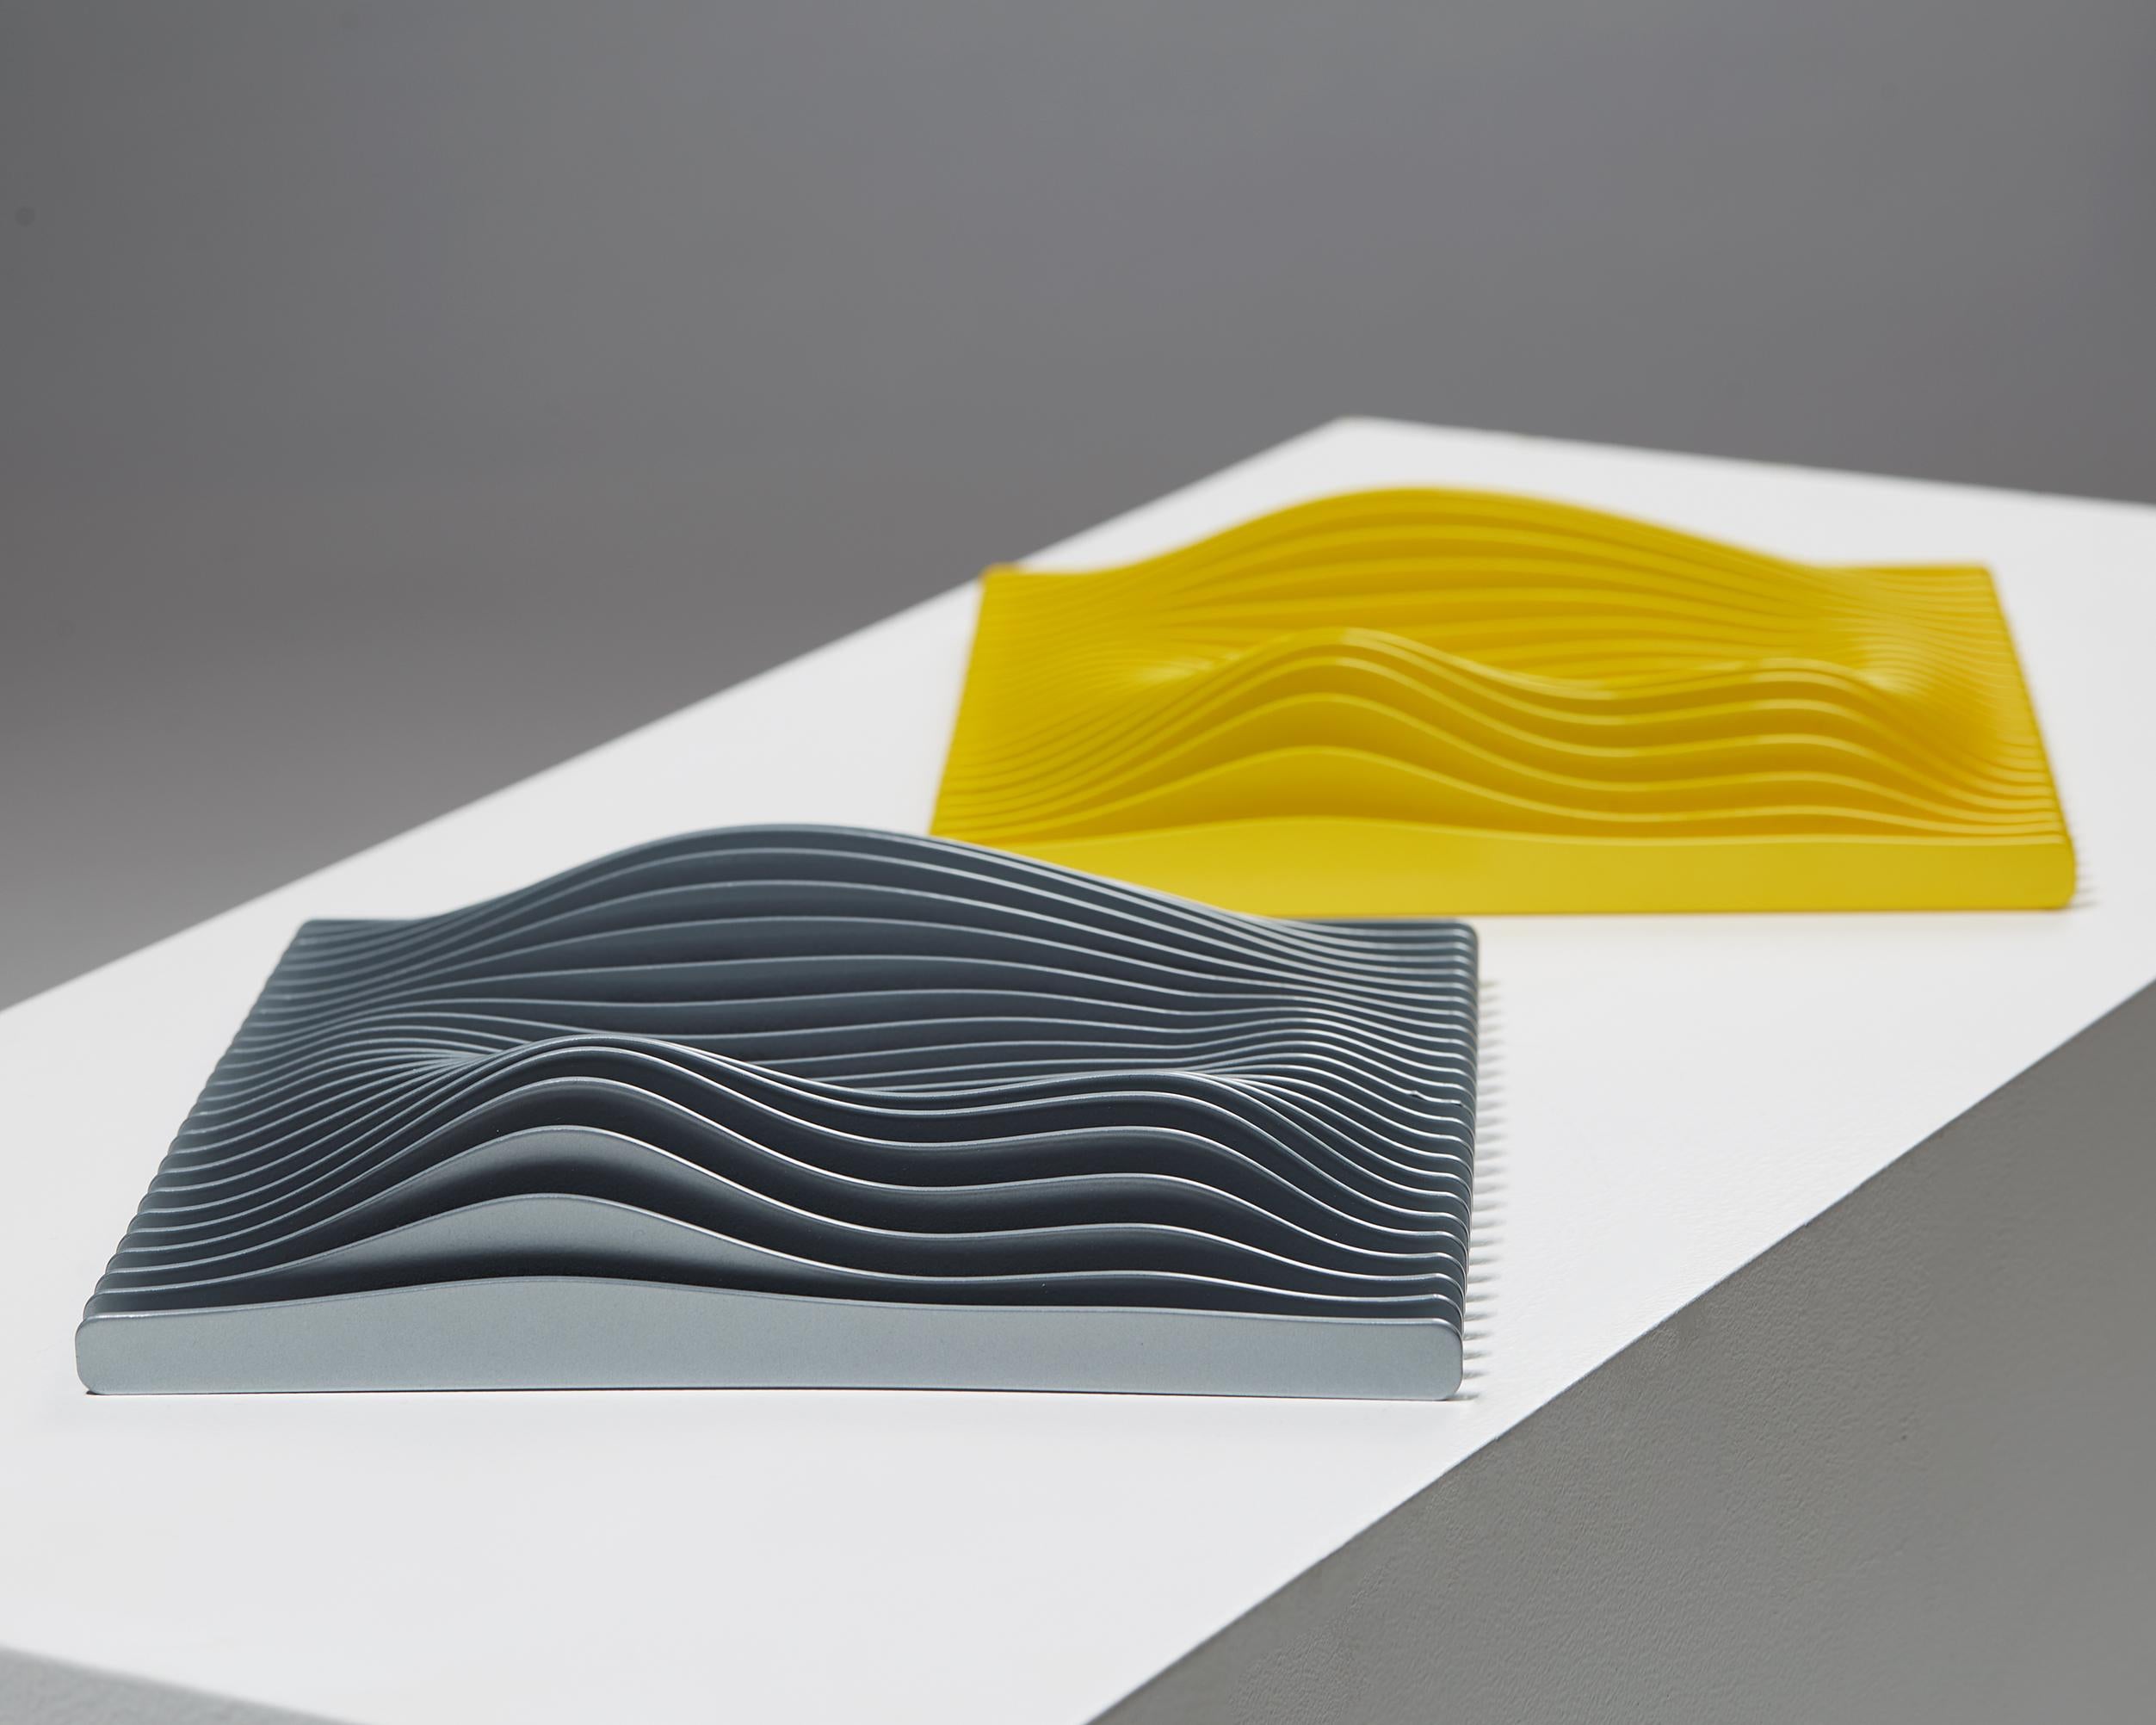 Sculptures “Landscape” designed by Alexander Lervik,
Sweden. 2014.

Lacquered steel.

Yellow one is sold.

Dimensions:
L: 24 cm/ 9 1/2